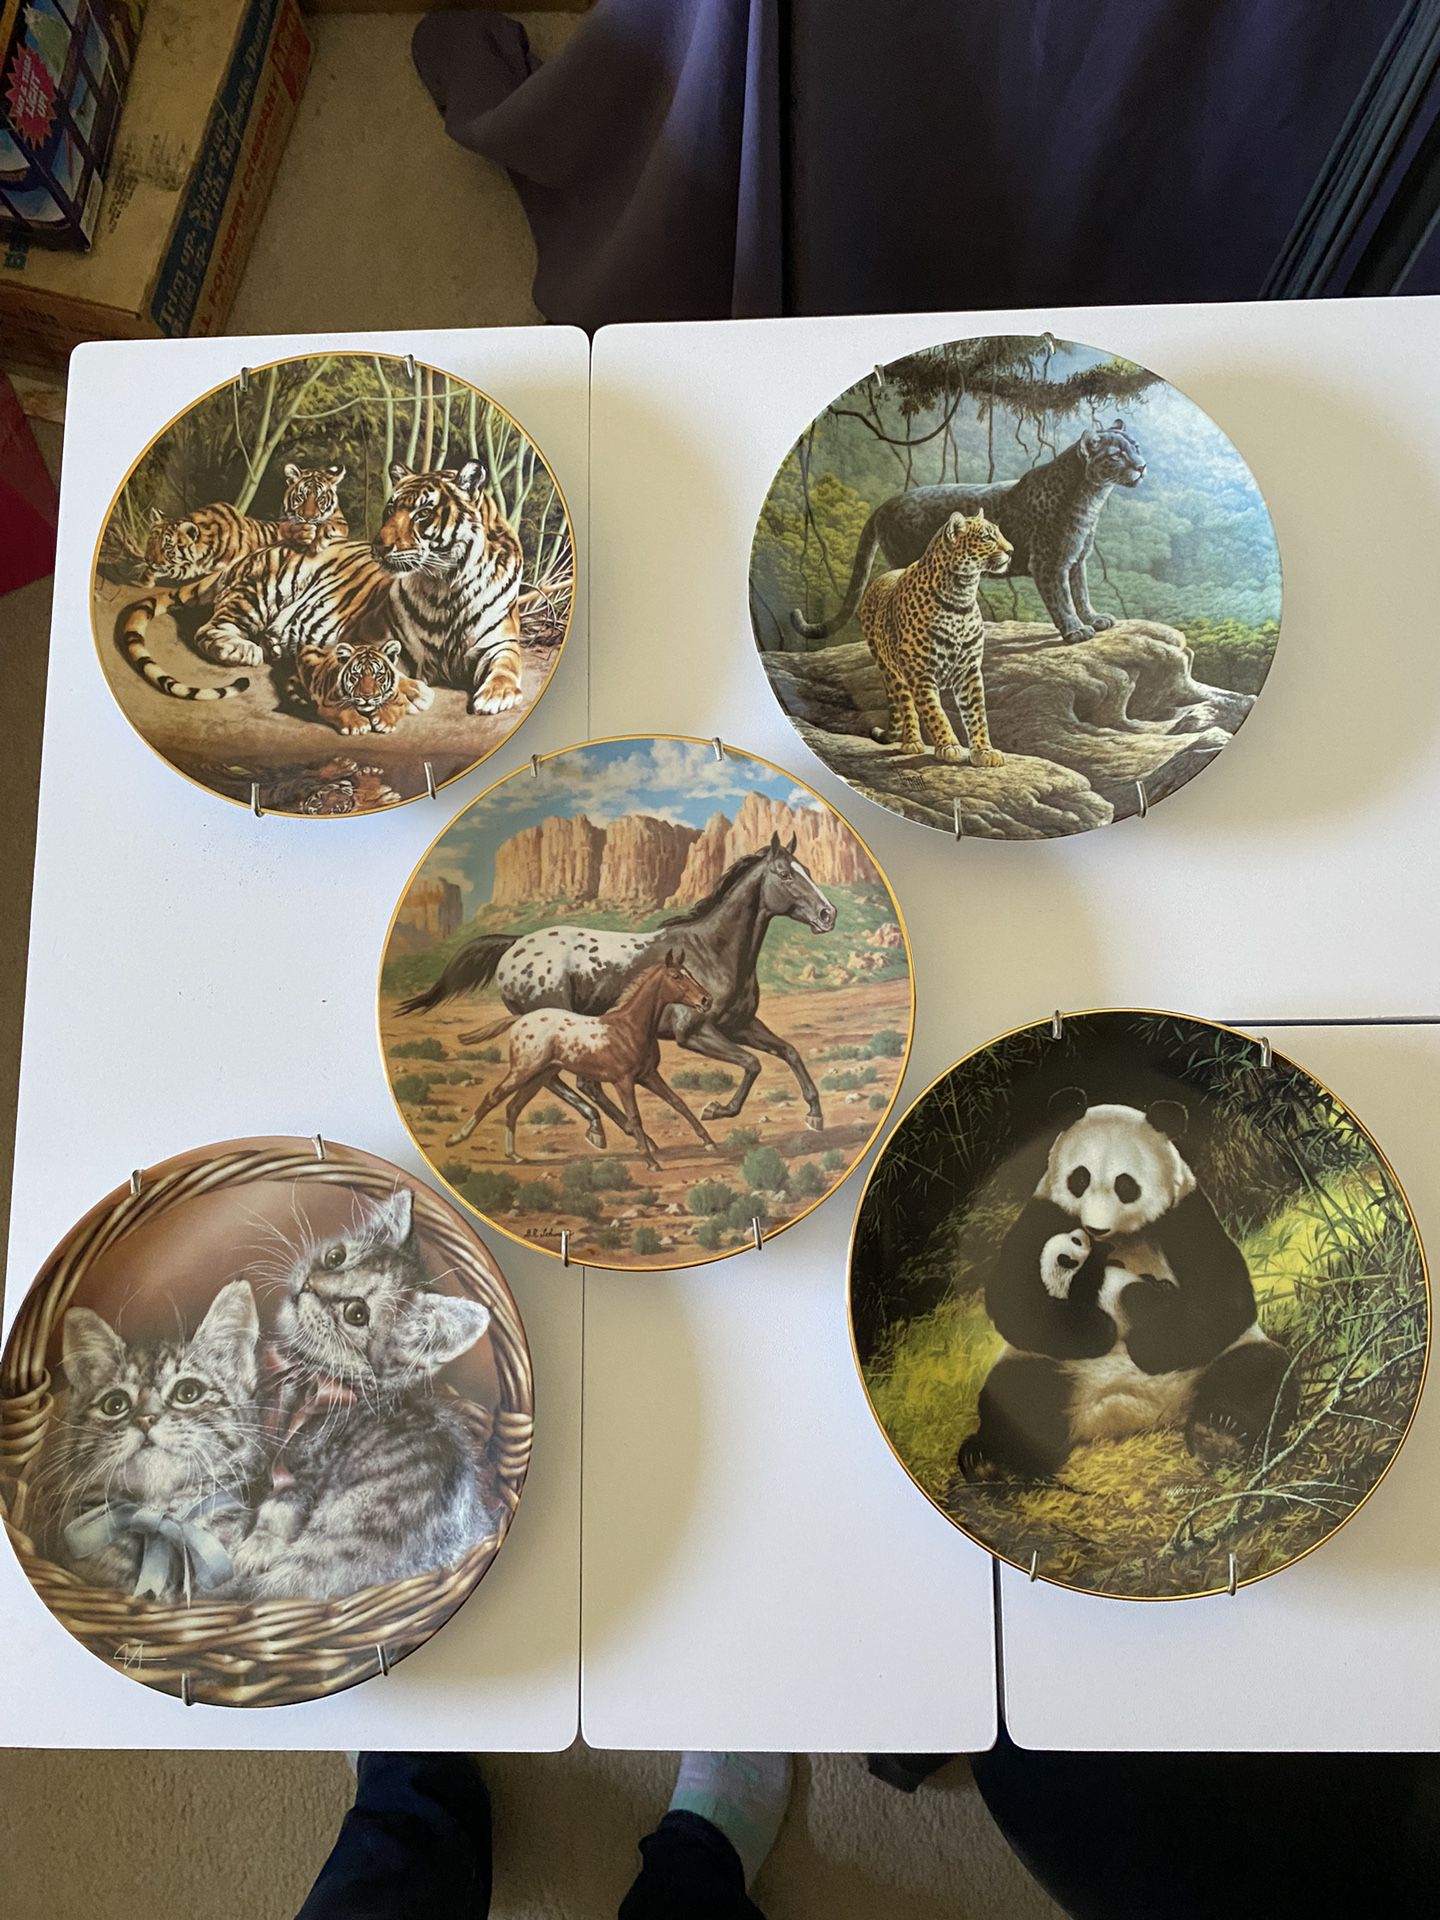 Animal China Plates 